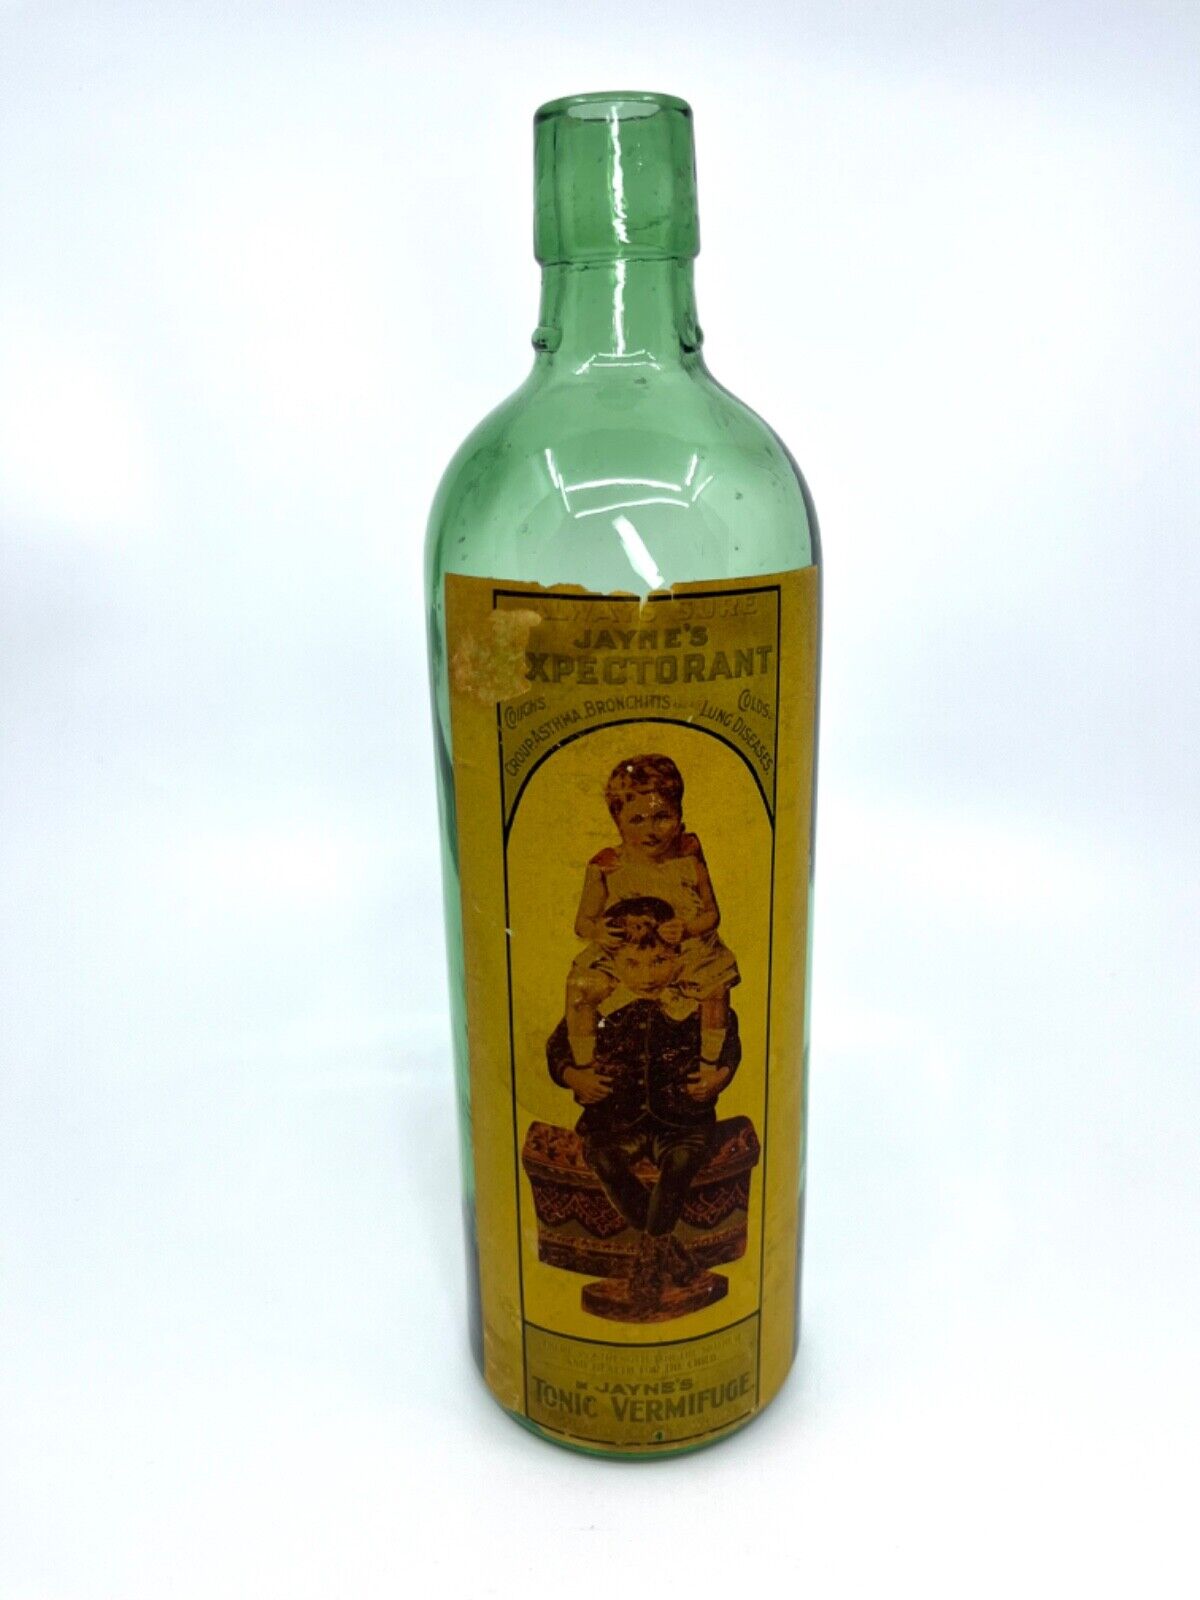 Vintage Jaynes Expectorant Glass Tonic Bottle nice original label